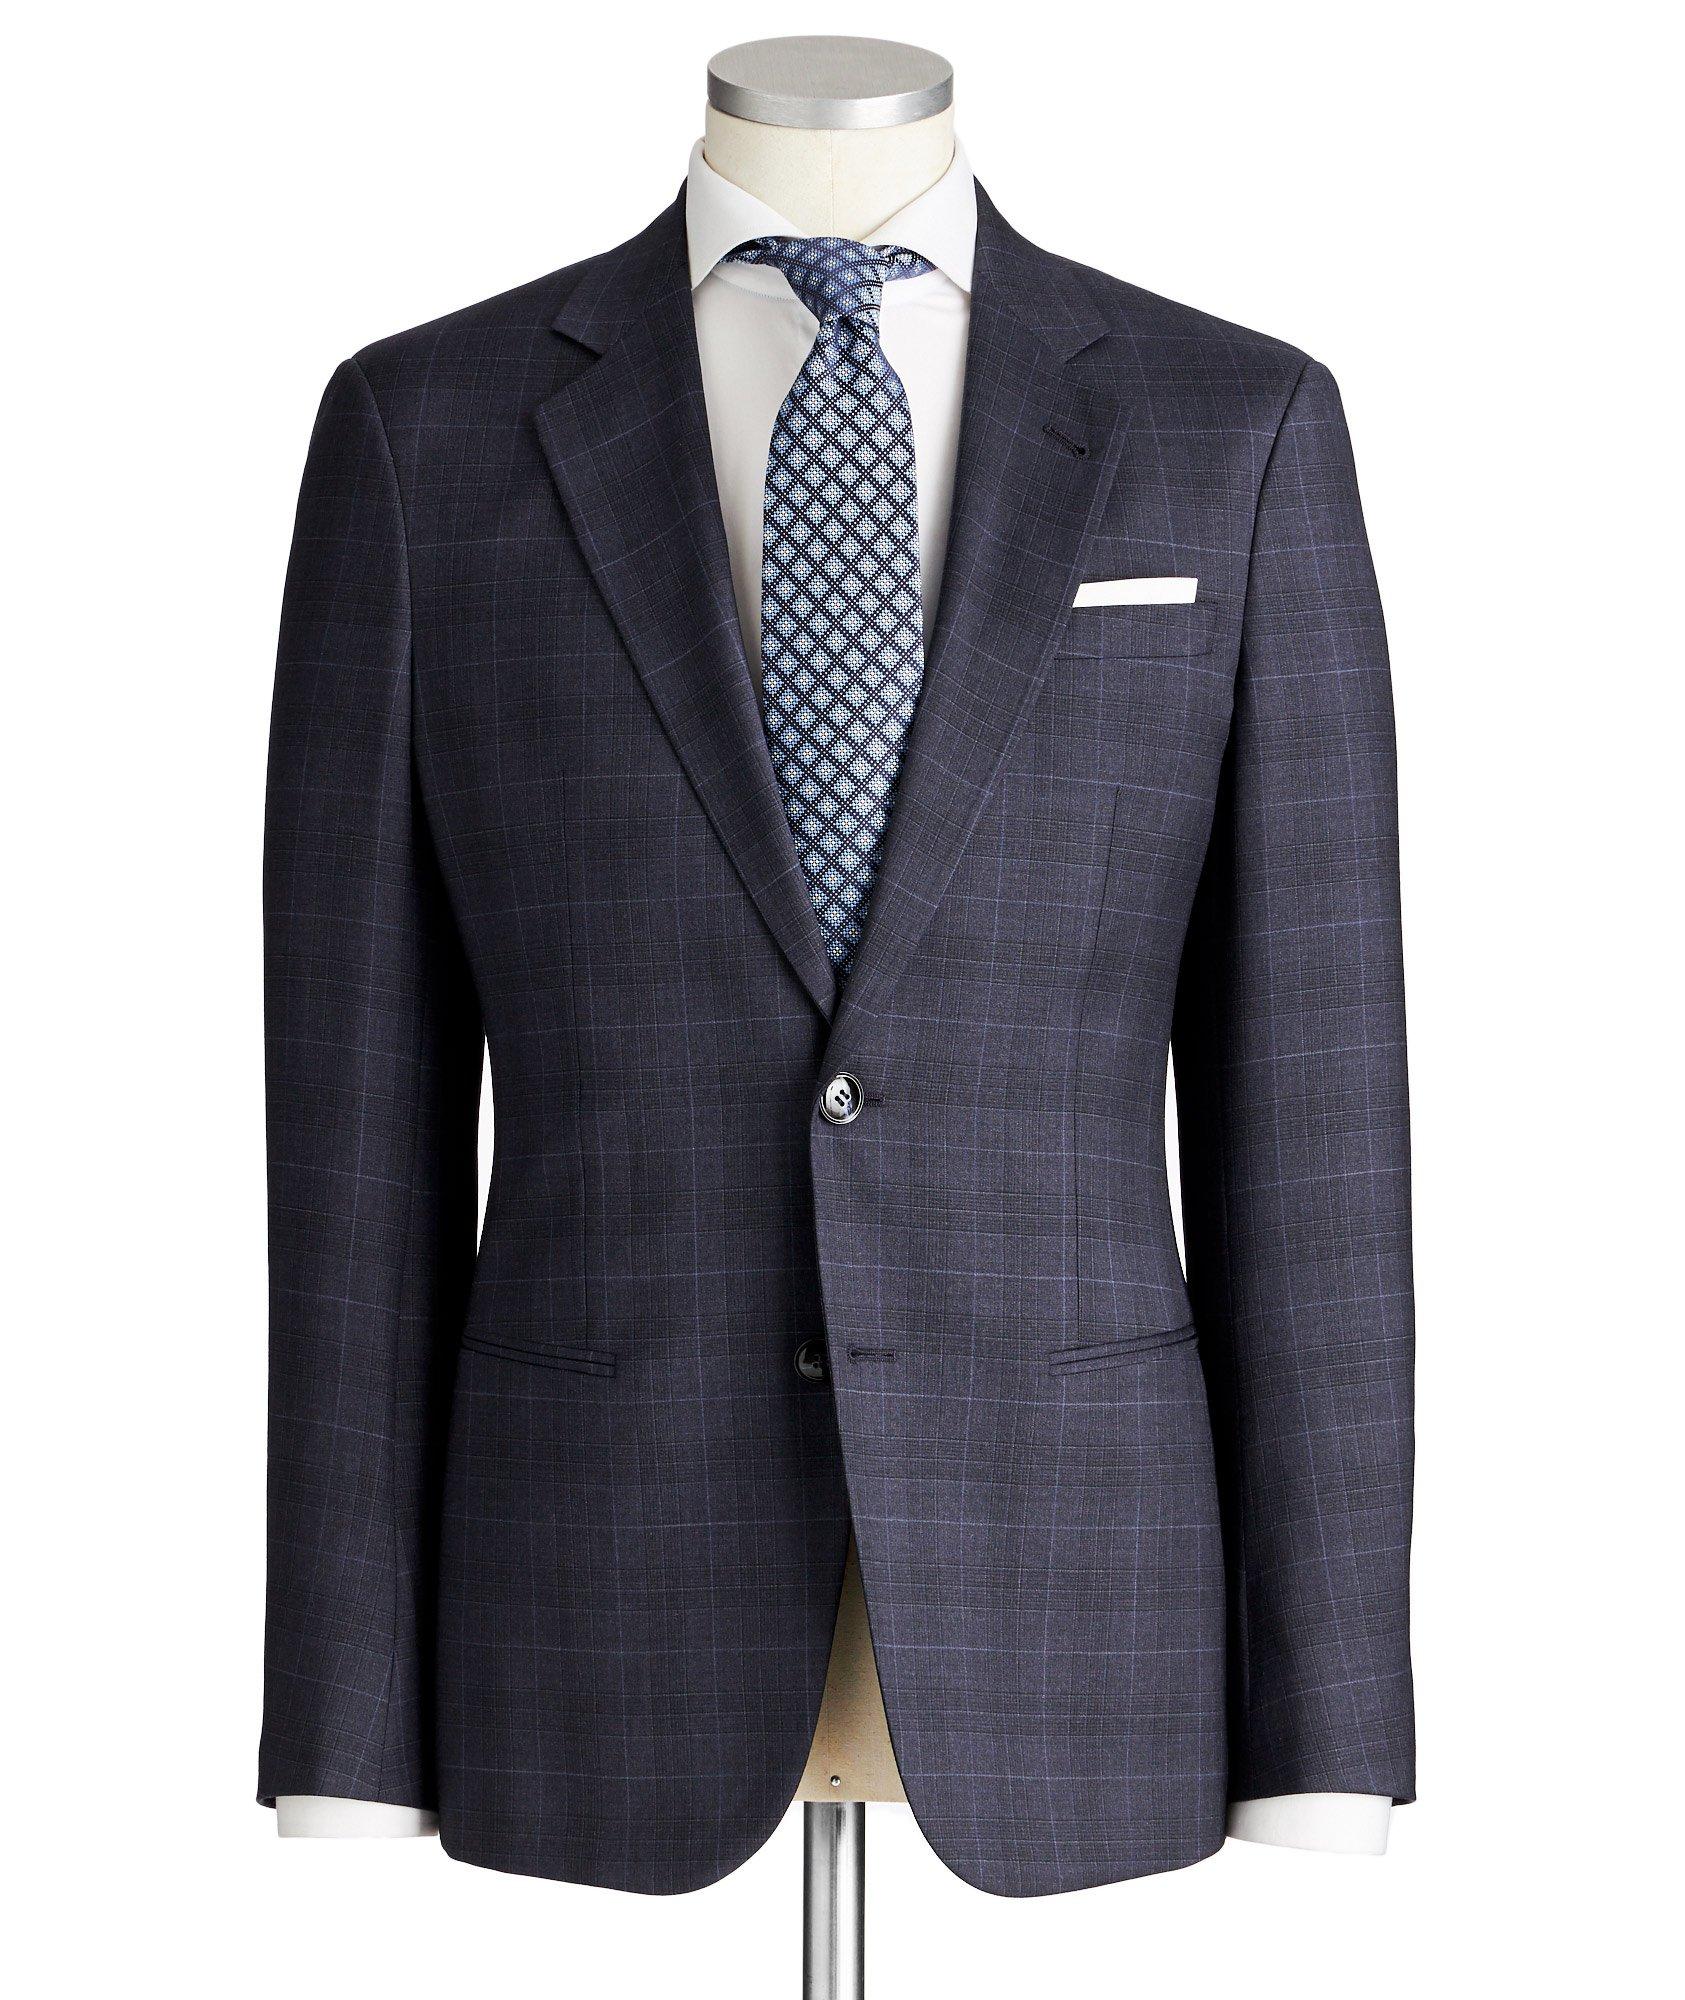 Soho Glen-Checked Suit image 0